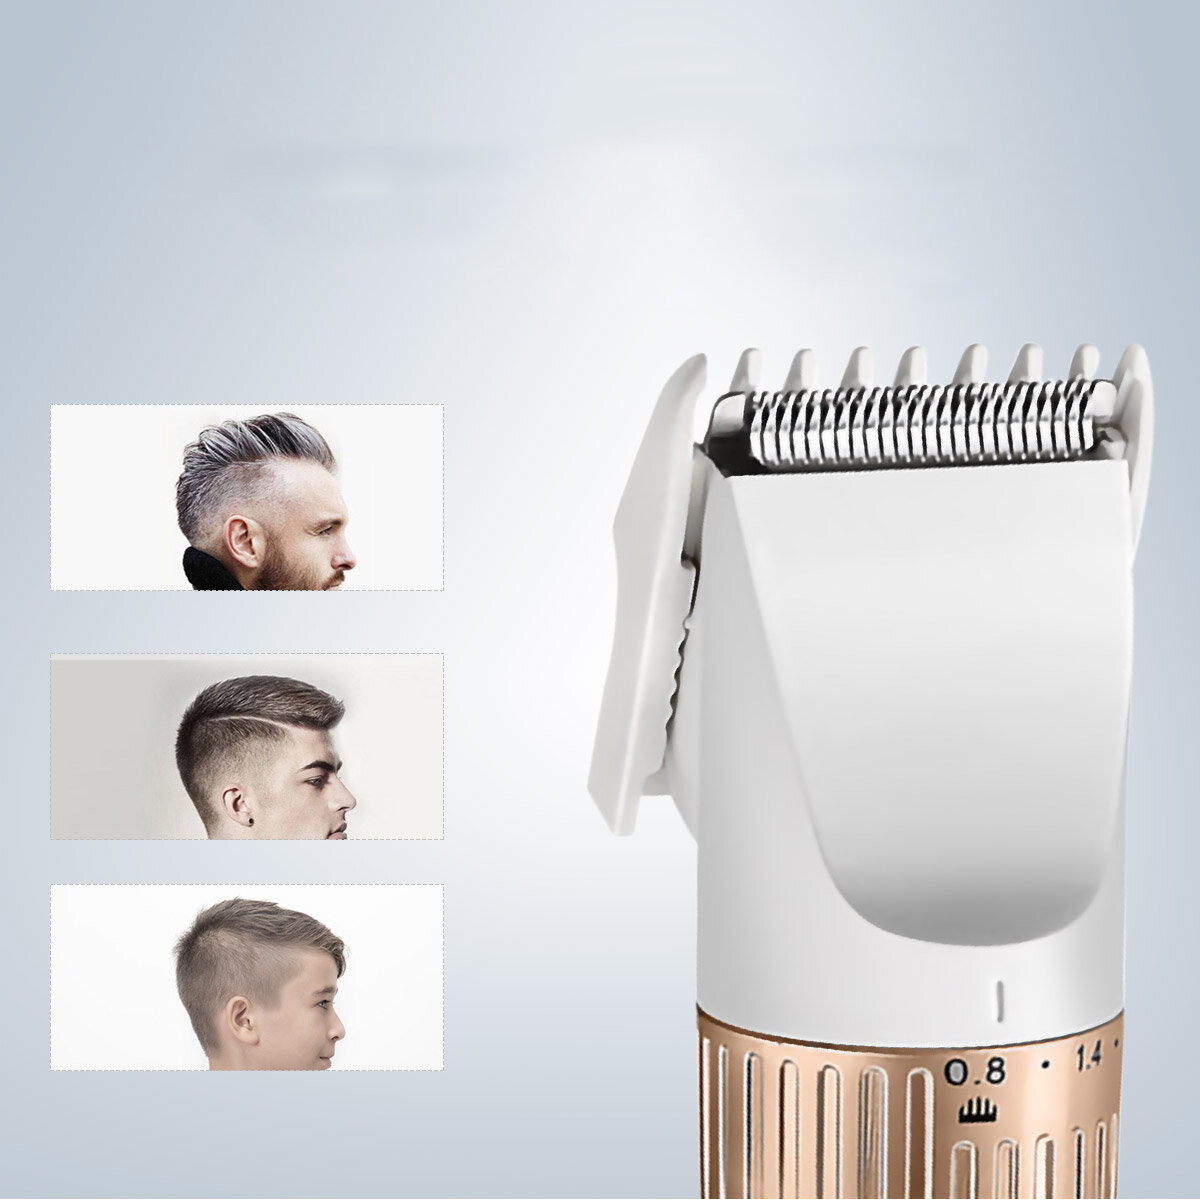 

KEMEI Men Electric Beard Hair Trimmer Clipper Rechargeable Stainless Blade Razor Battery Hair Cutting Machine KM-9020